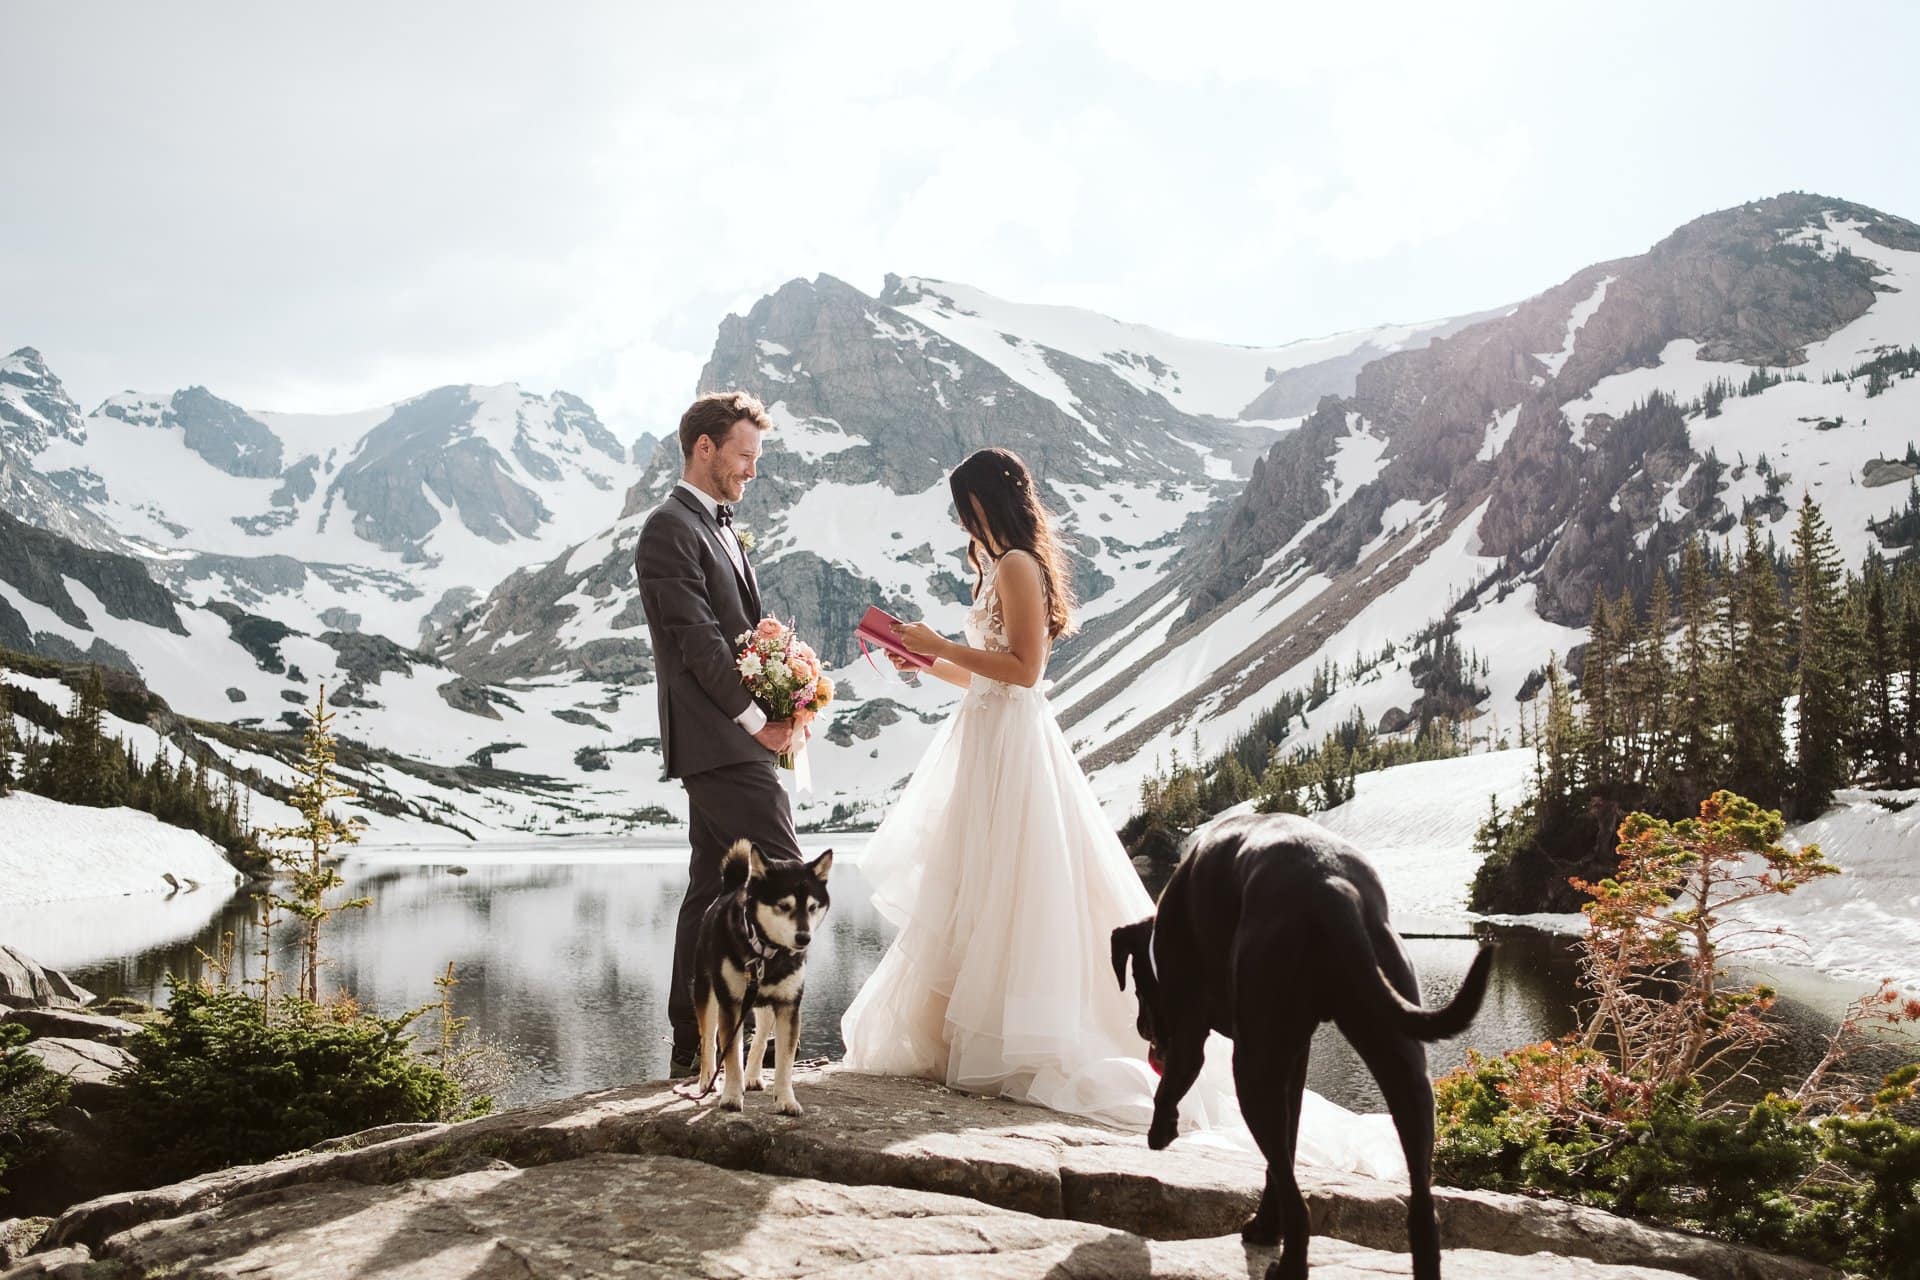 Indian Peaks Wilderness elopement, Colorado adventure elopement photographer, mountain elopement ceremony at alpine lake